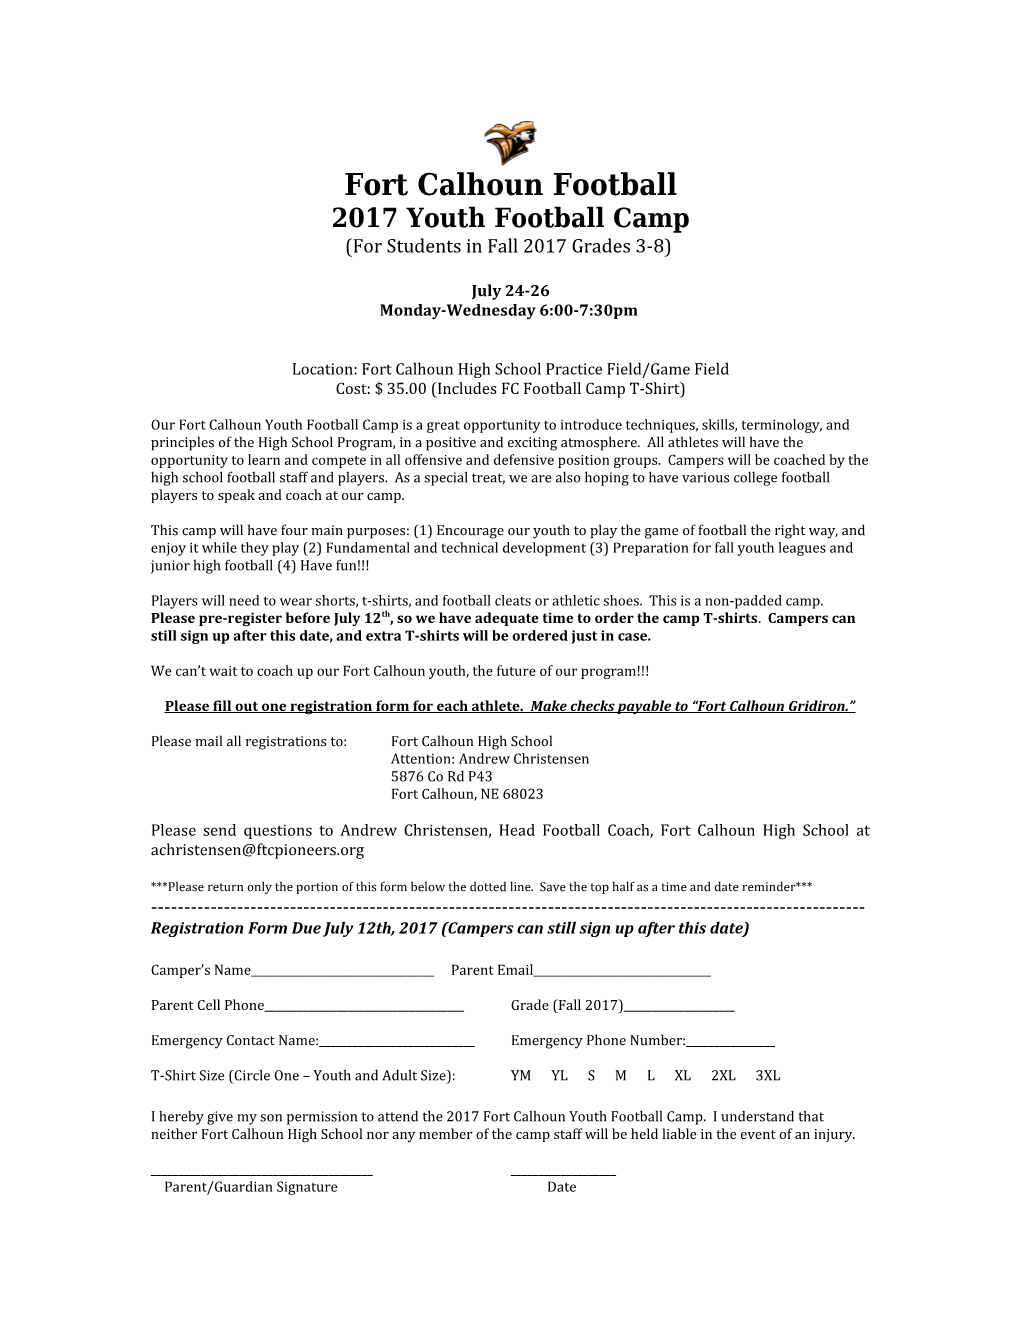 Location: Fort Calhoun High School Practice Field/Game Field